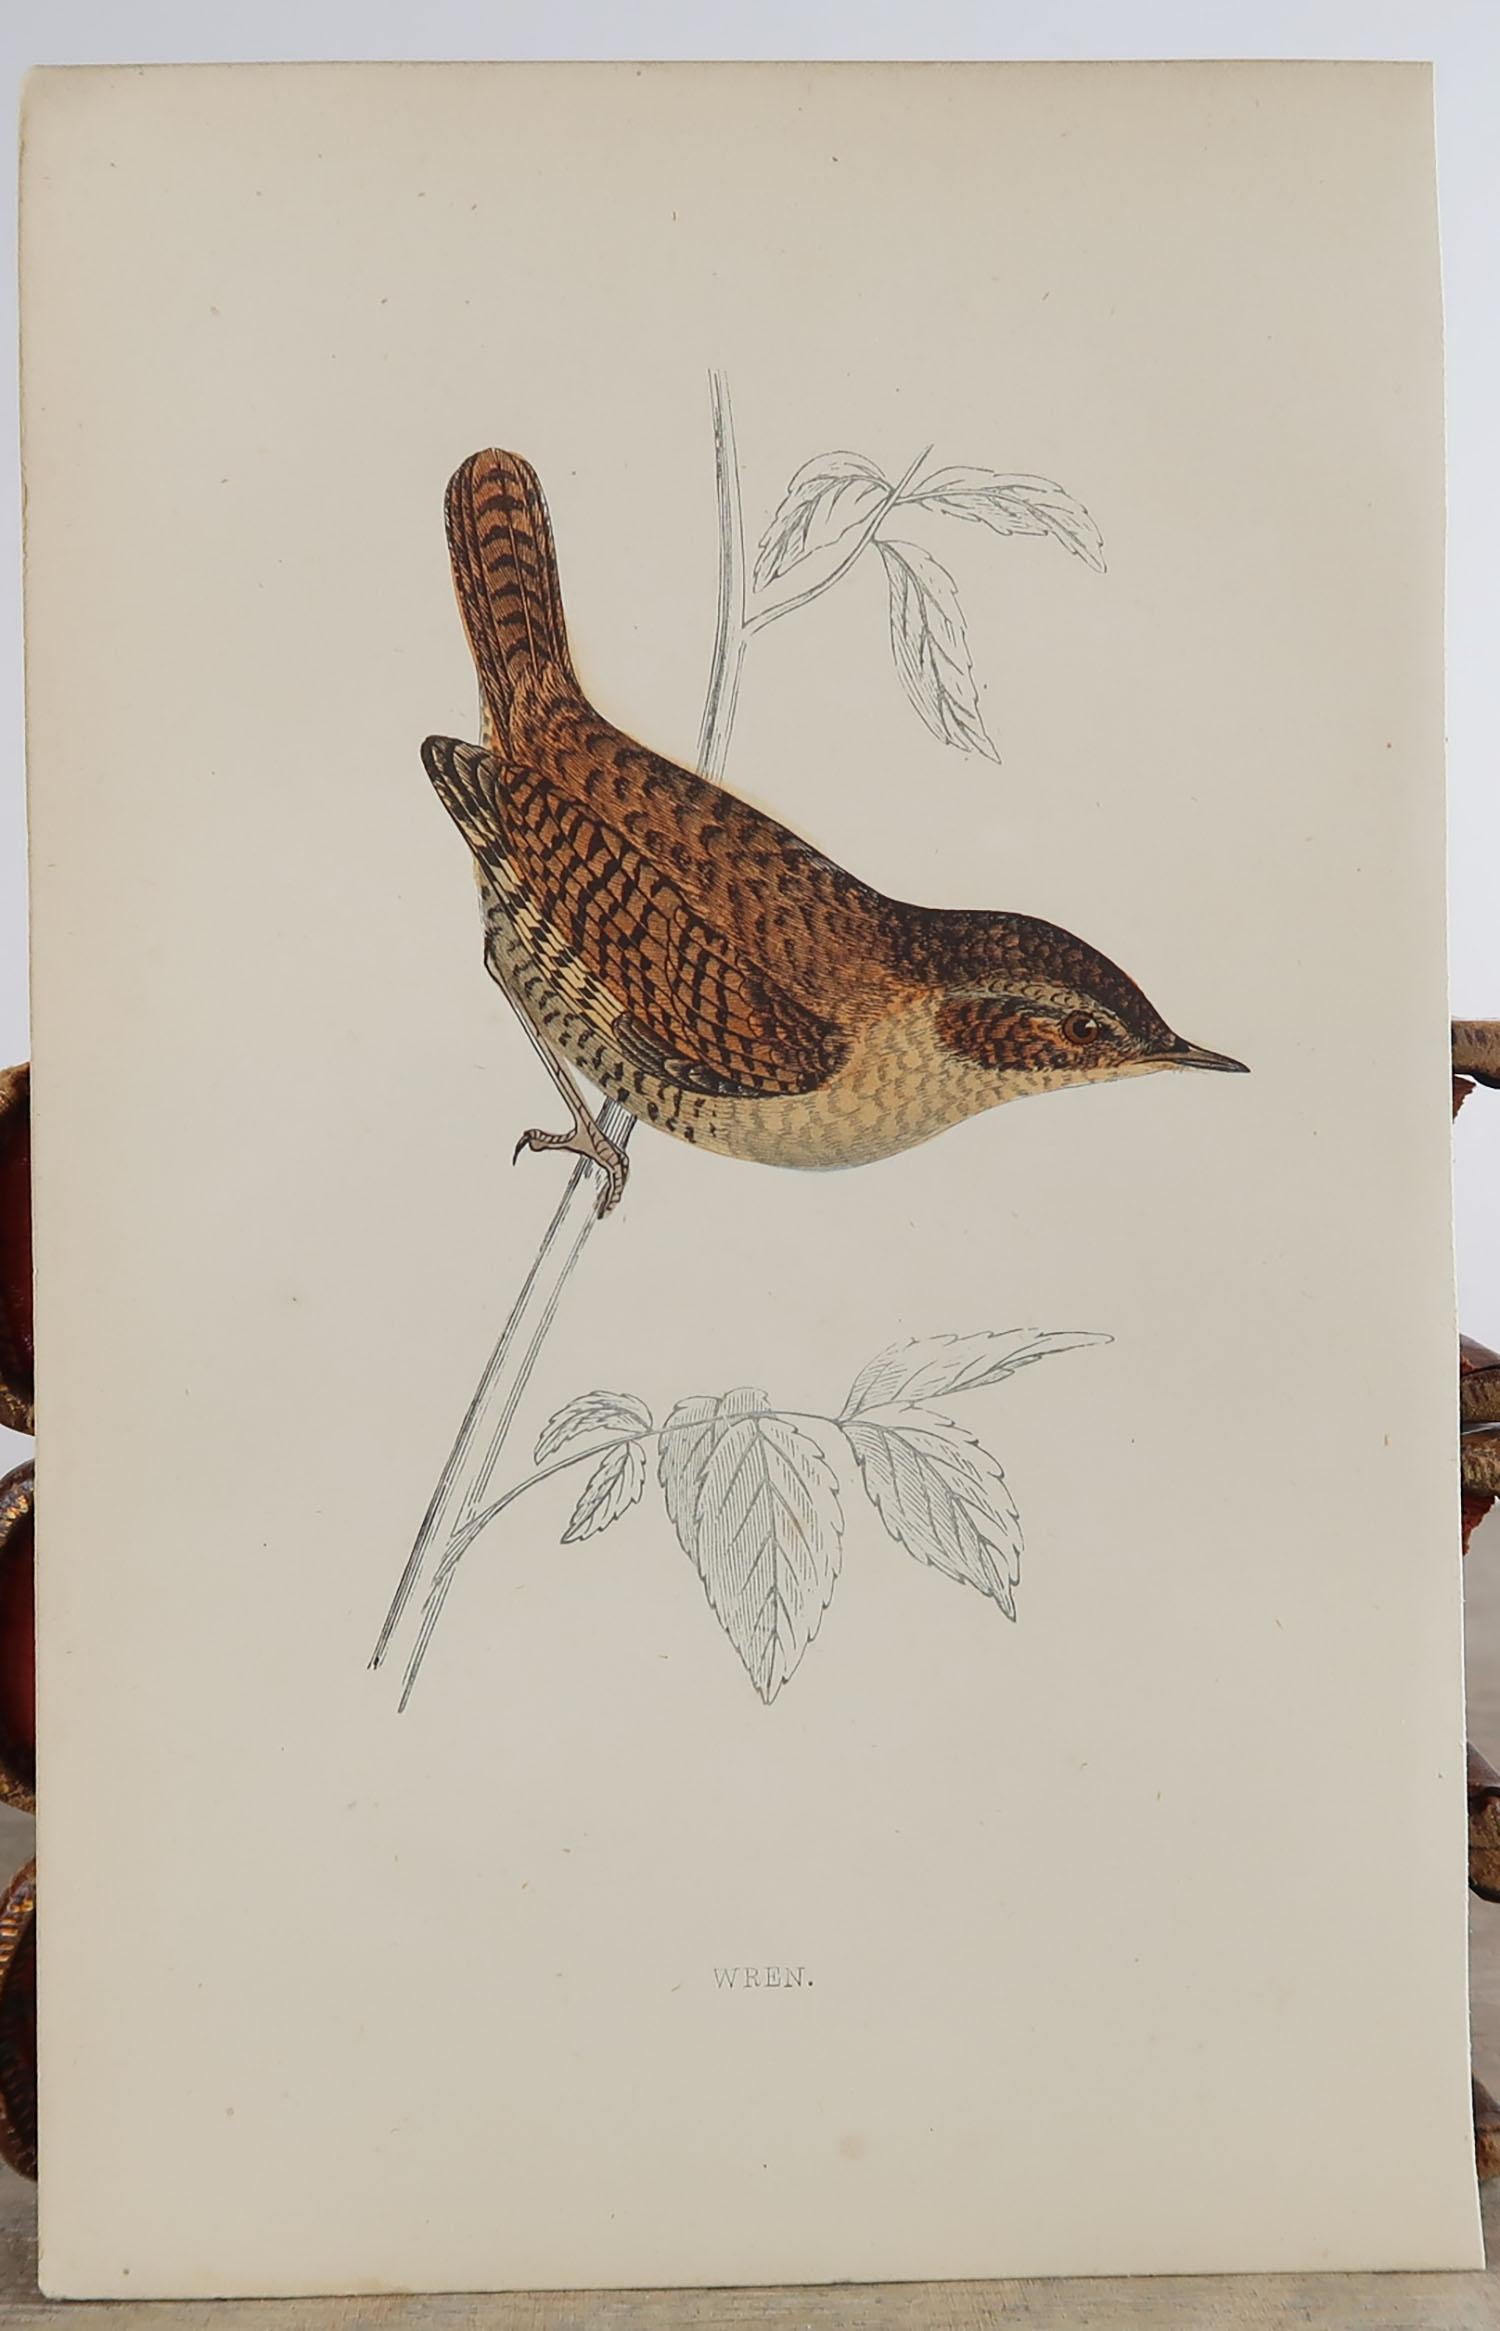 Folk Art Original Antique Bird Print, the Wren, circa 1870